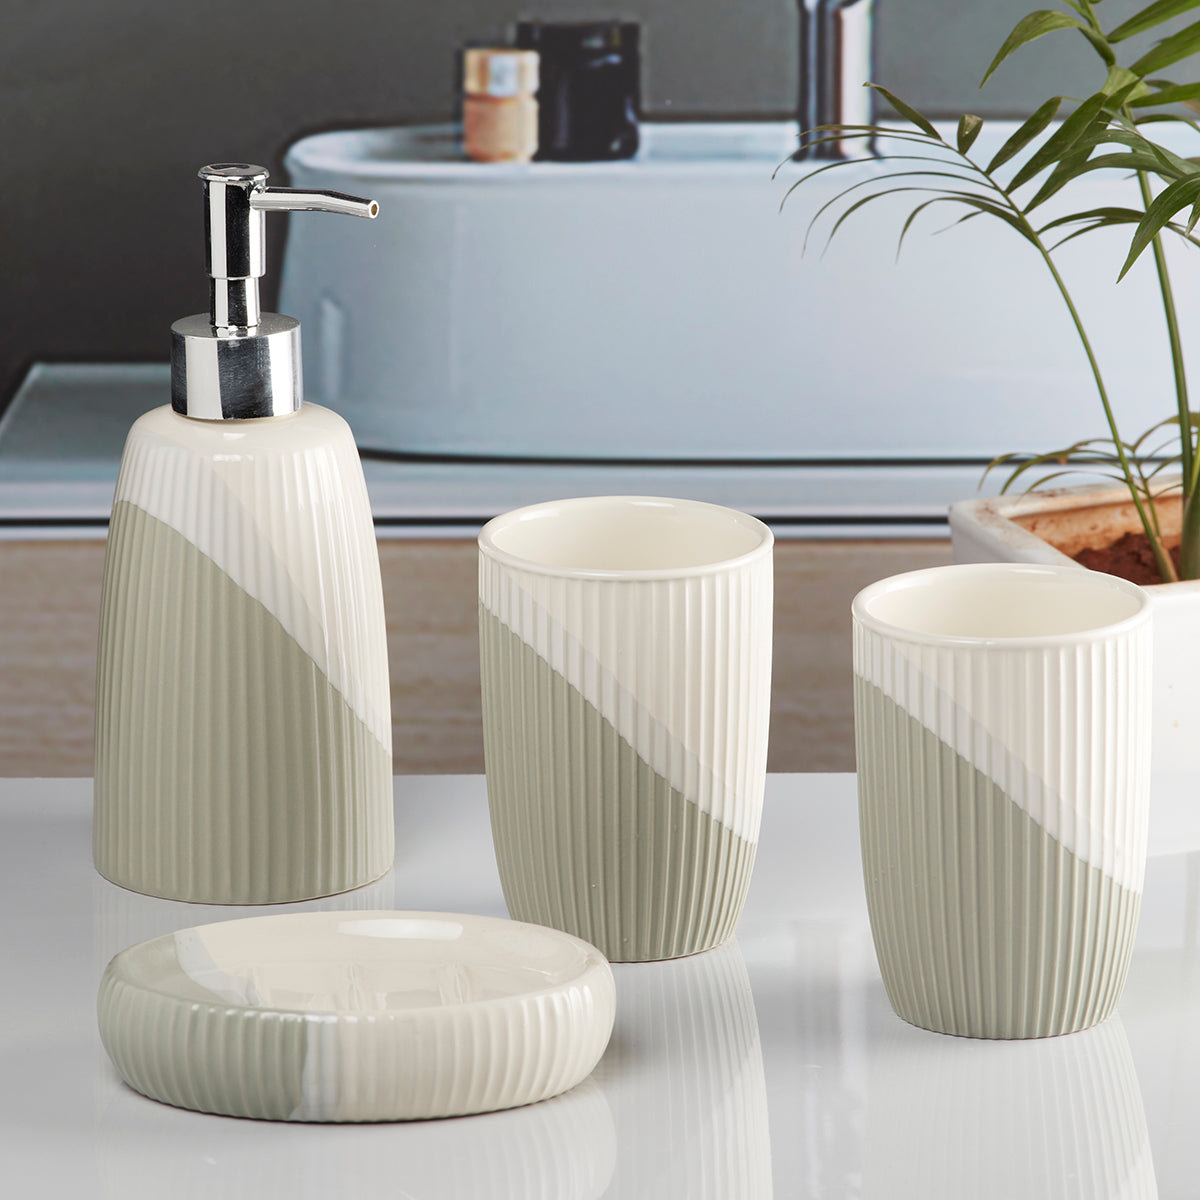 Ceramic Bathroom Accessories Set of 4 Bath Set with Soap Dispenser (10100)